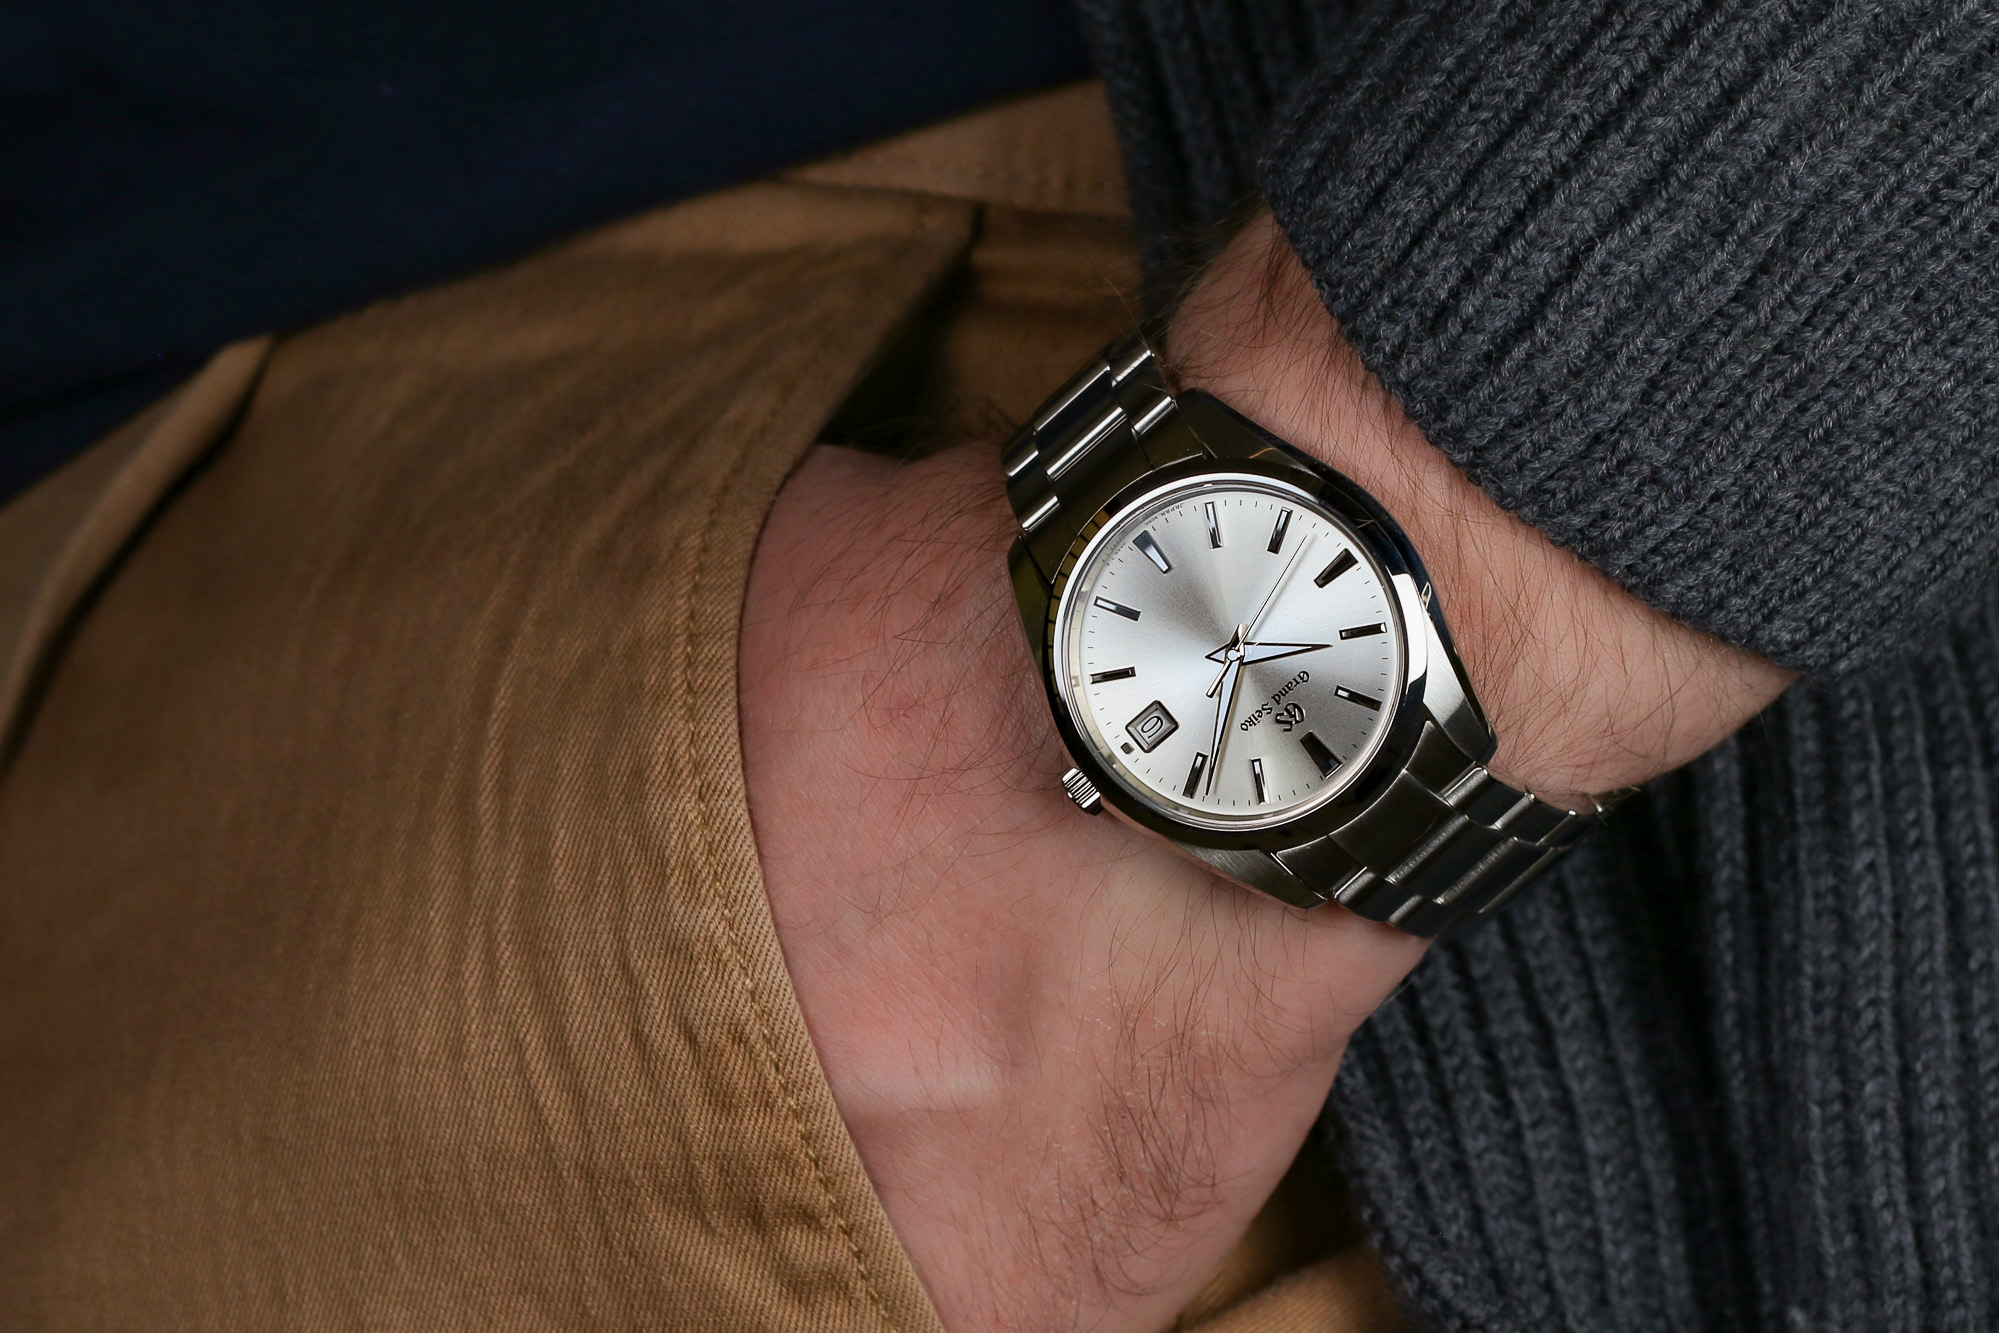 Grand Seiko SBGP009 stainless steel wristwatch worn on the wrist.